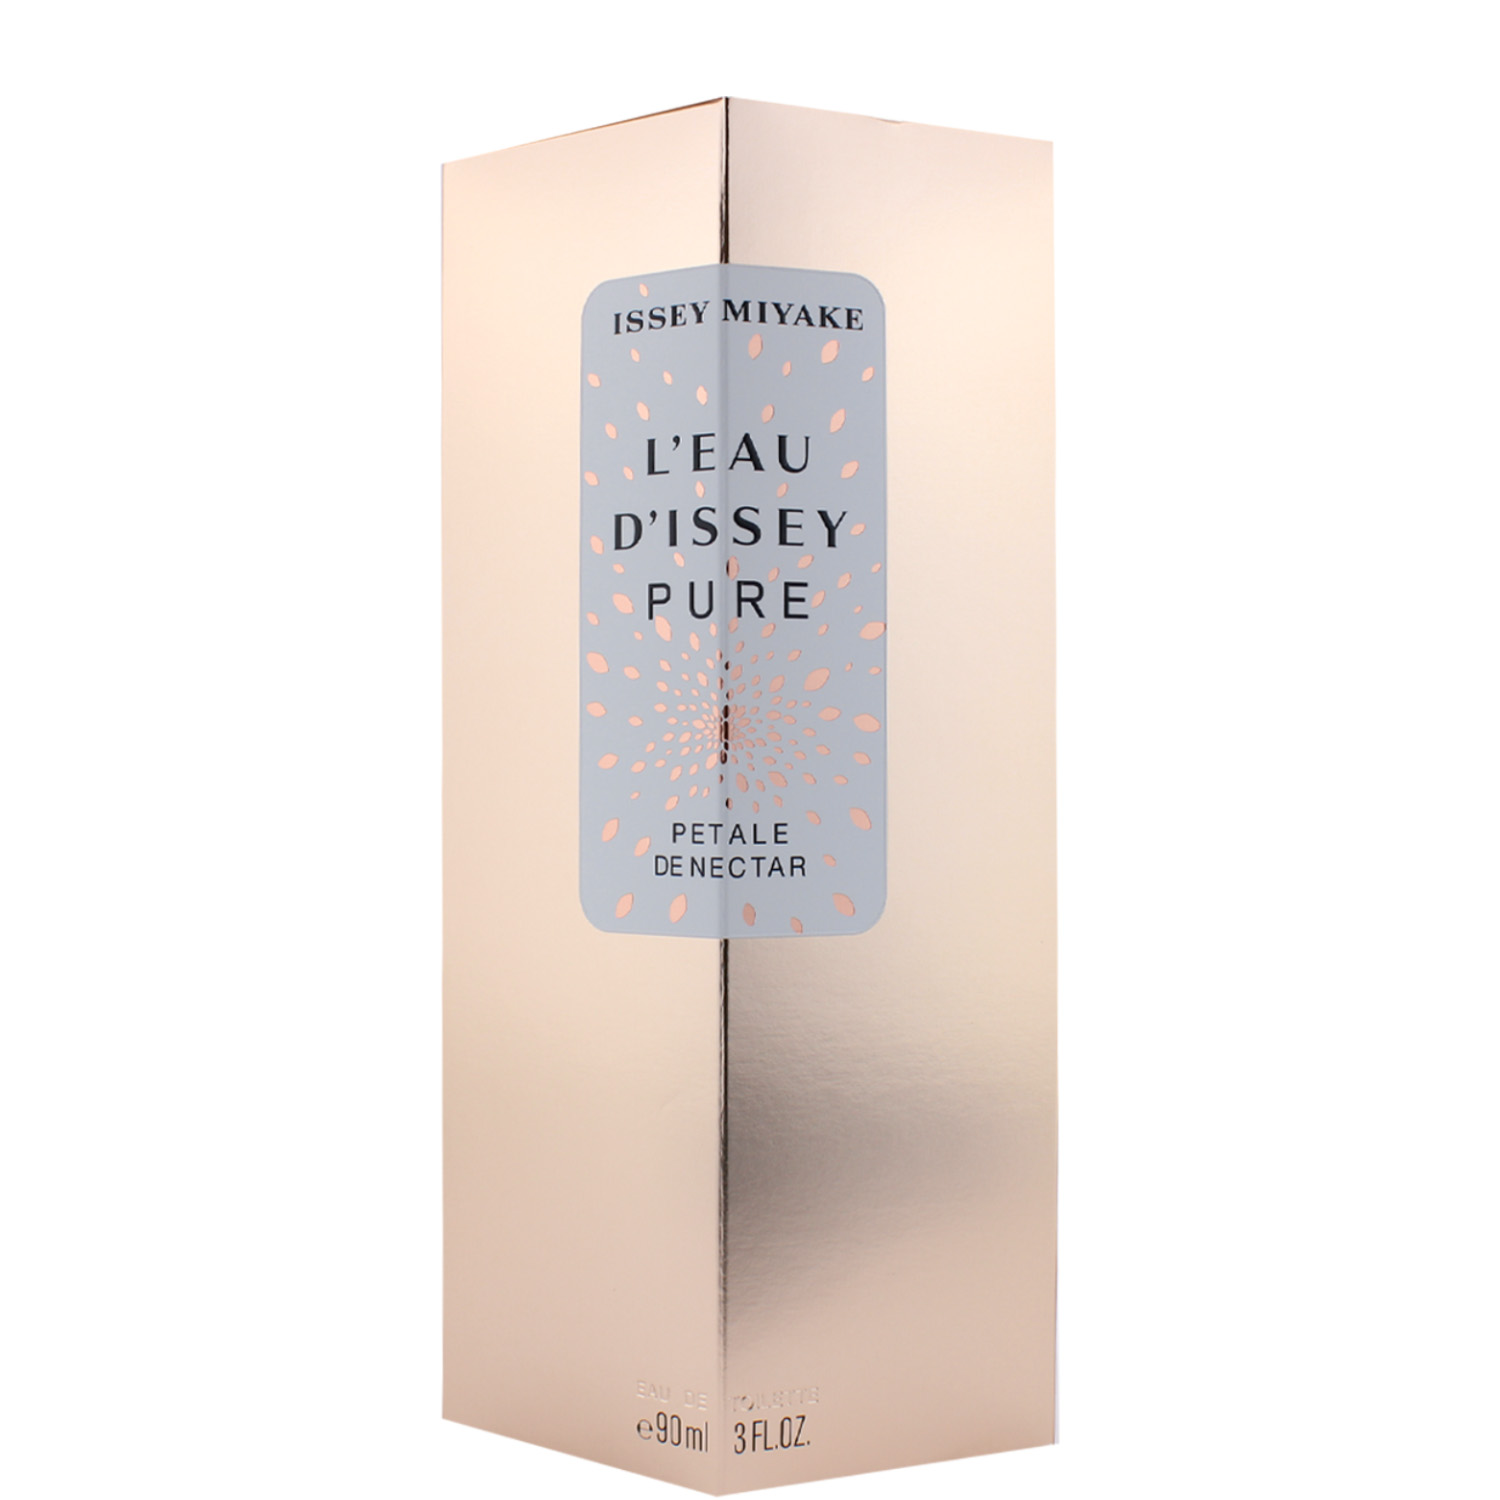 Issey Miyake L'eau D'Issey Pure Petale de Nectar Eau de Toilette 90ml